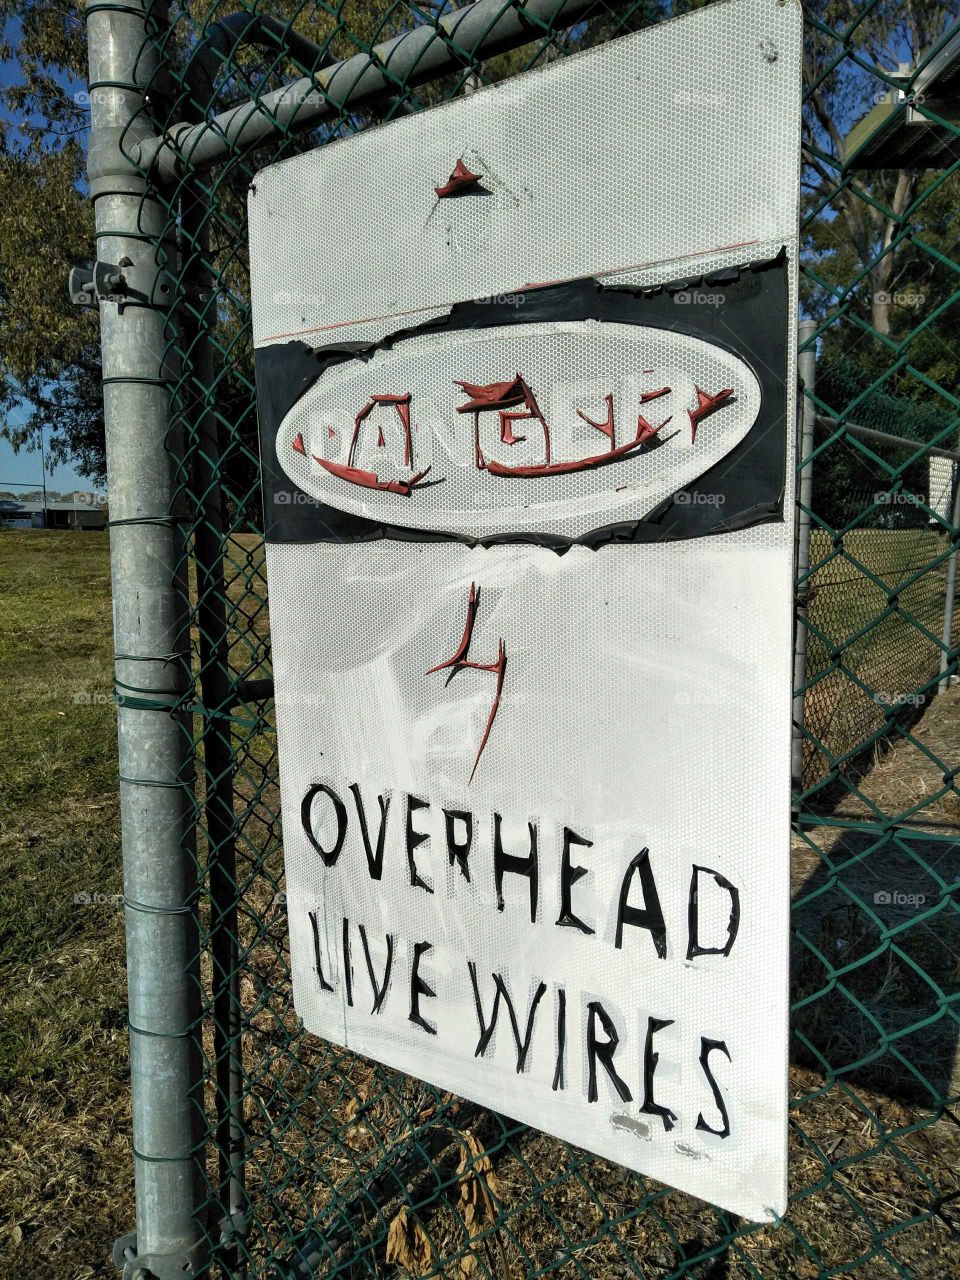 danger sign overhead wires